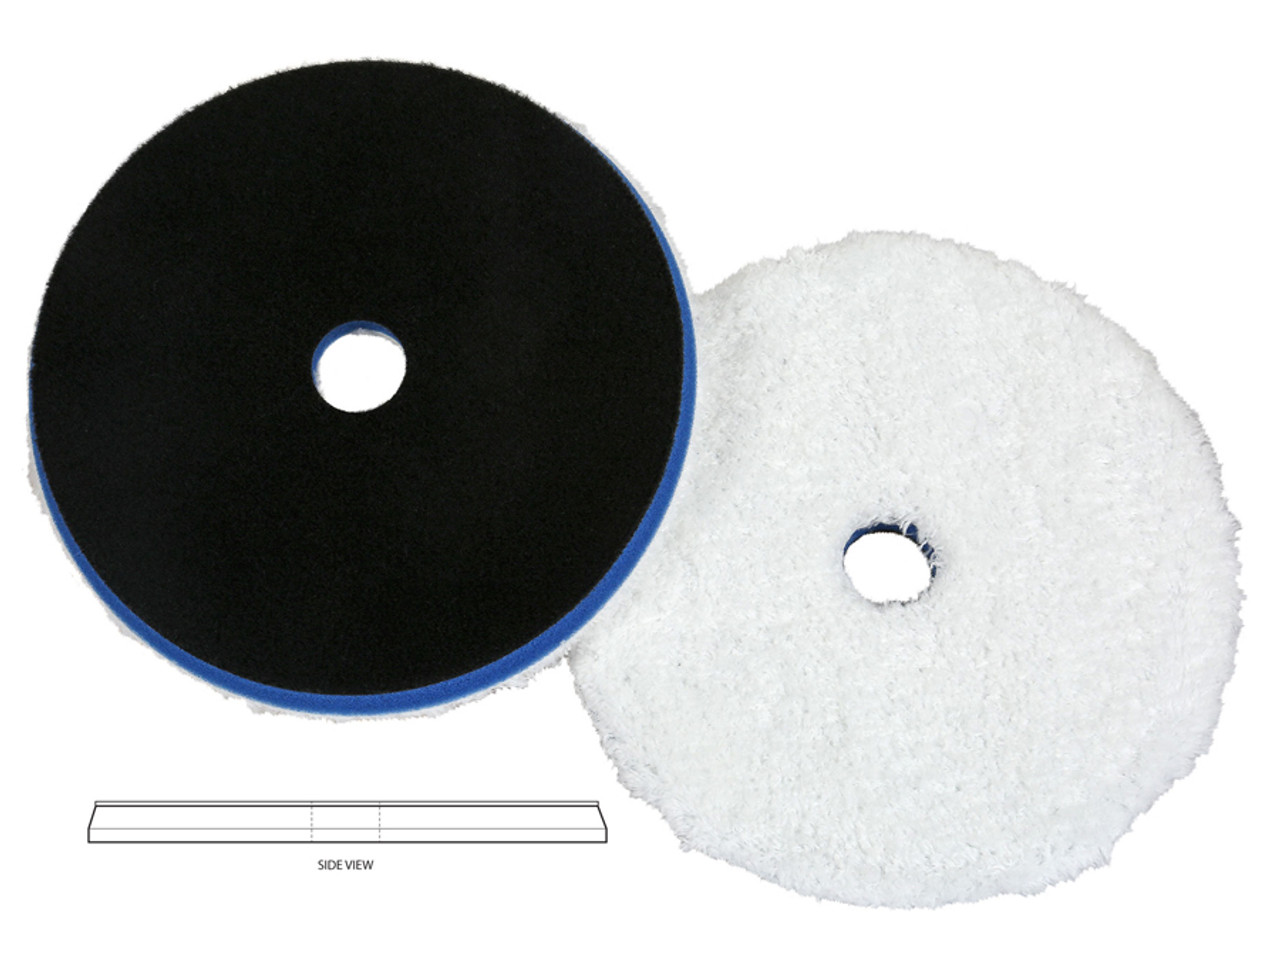 CarPro Microfiber Heavy Cutting Pad 6 Compounding Disc for Fast Cut with Less Labor 1 at MechanicSurplus.com 55mfp6